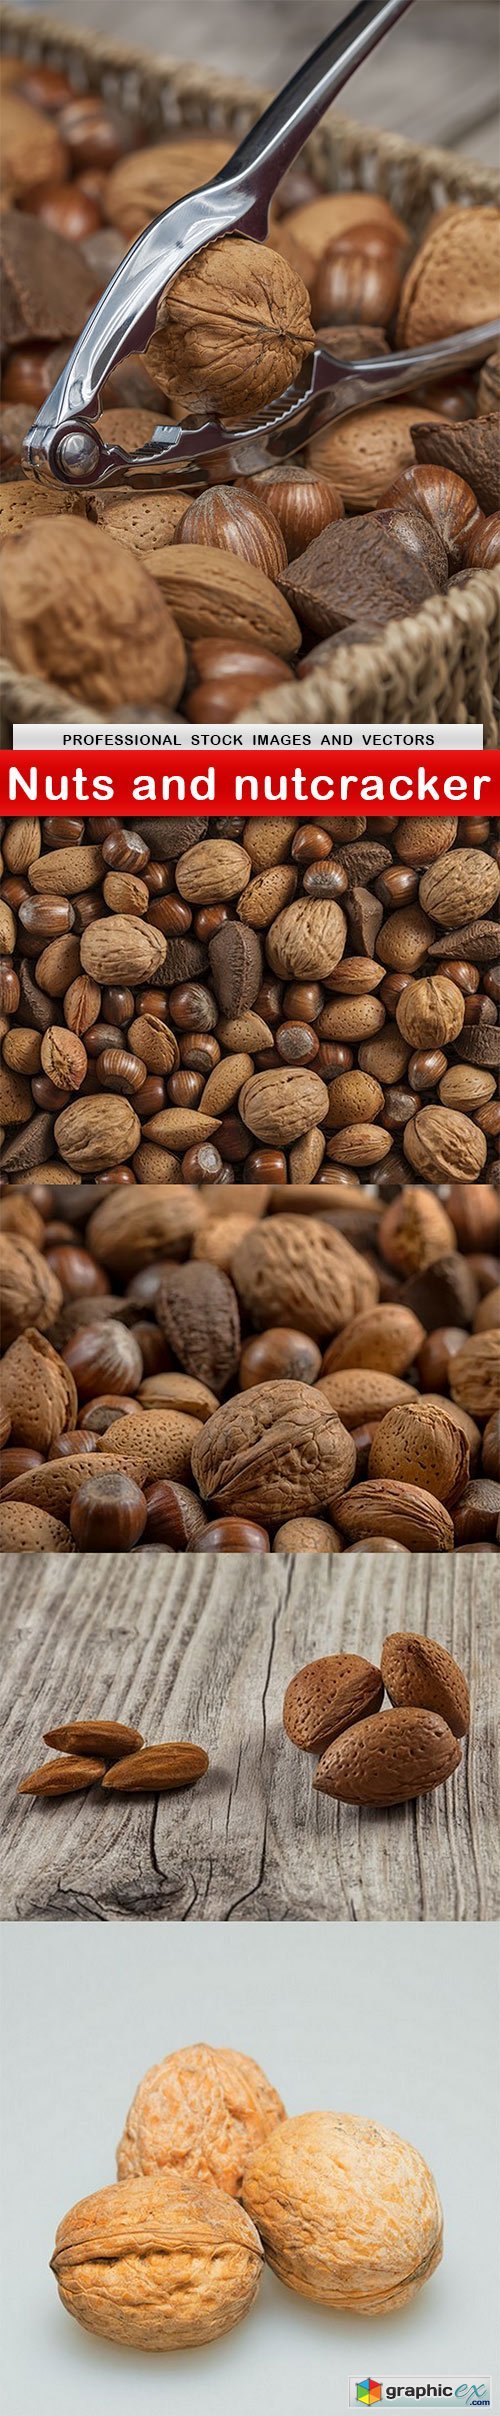 Nuts and nutcracker - 5 UHQ JPEG